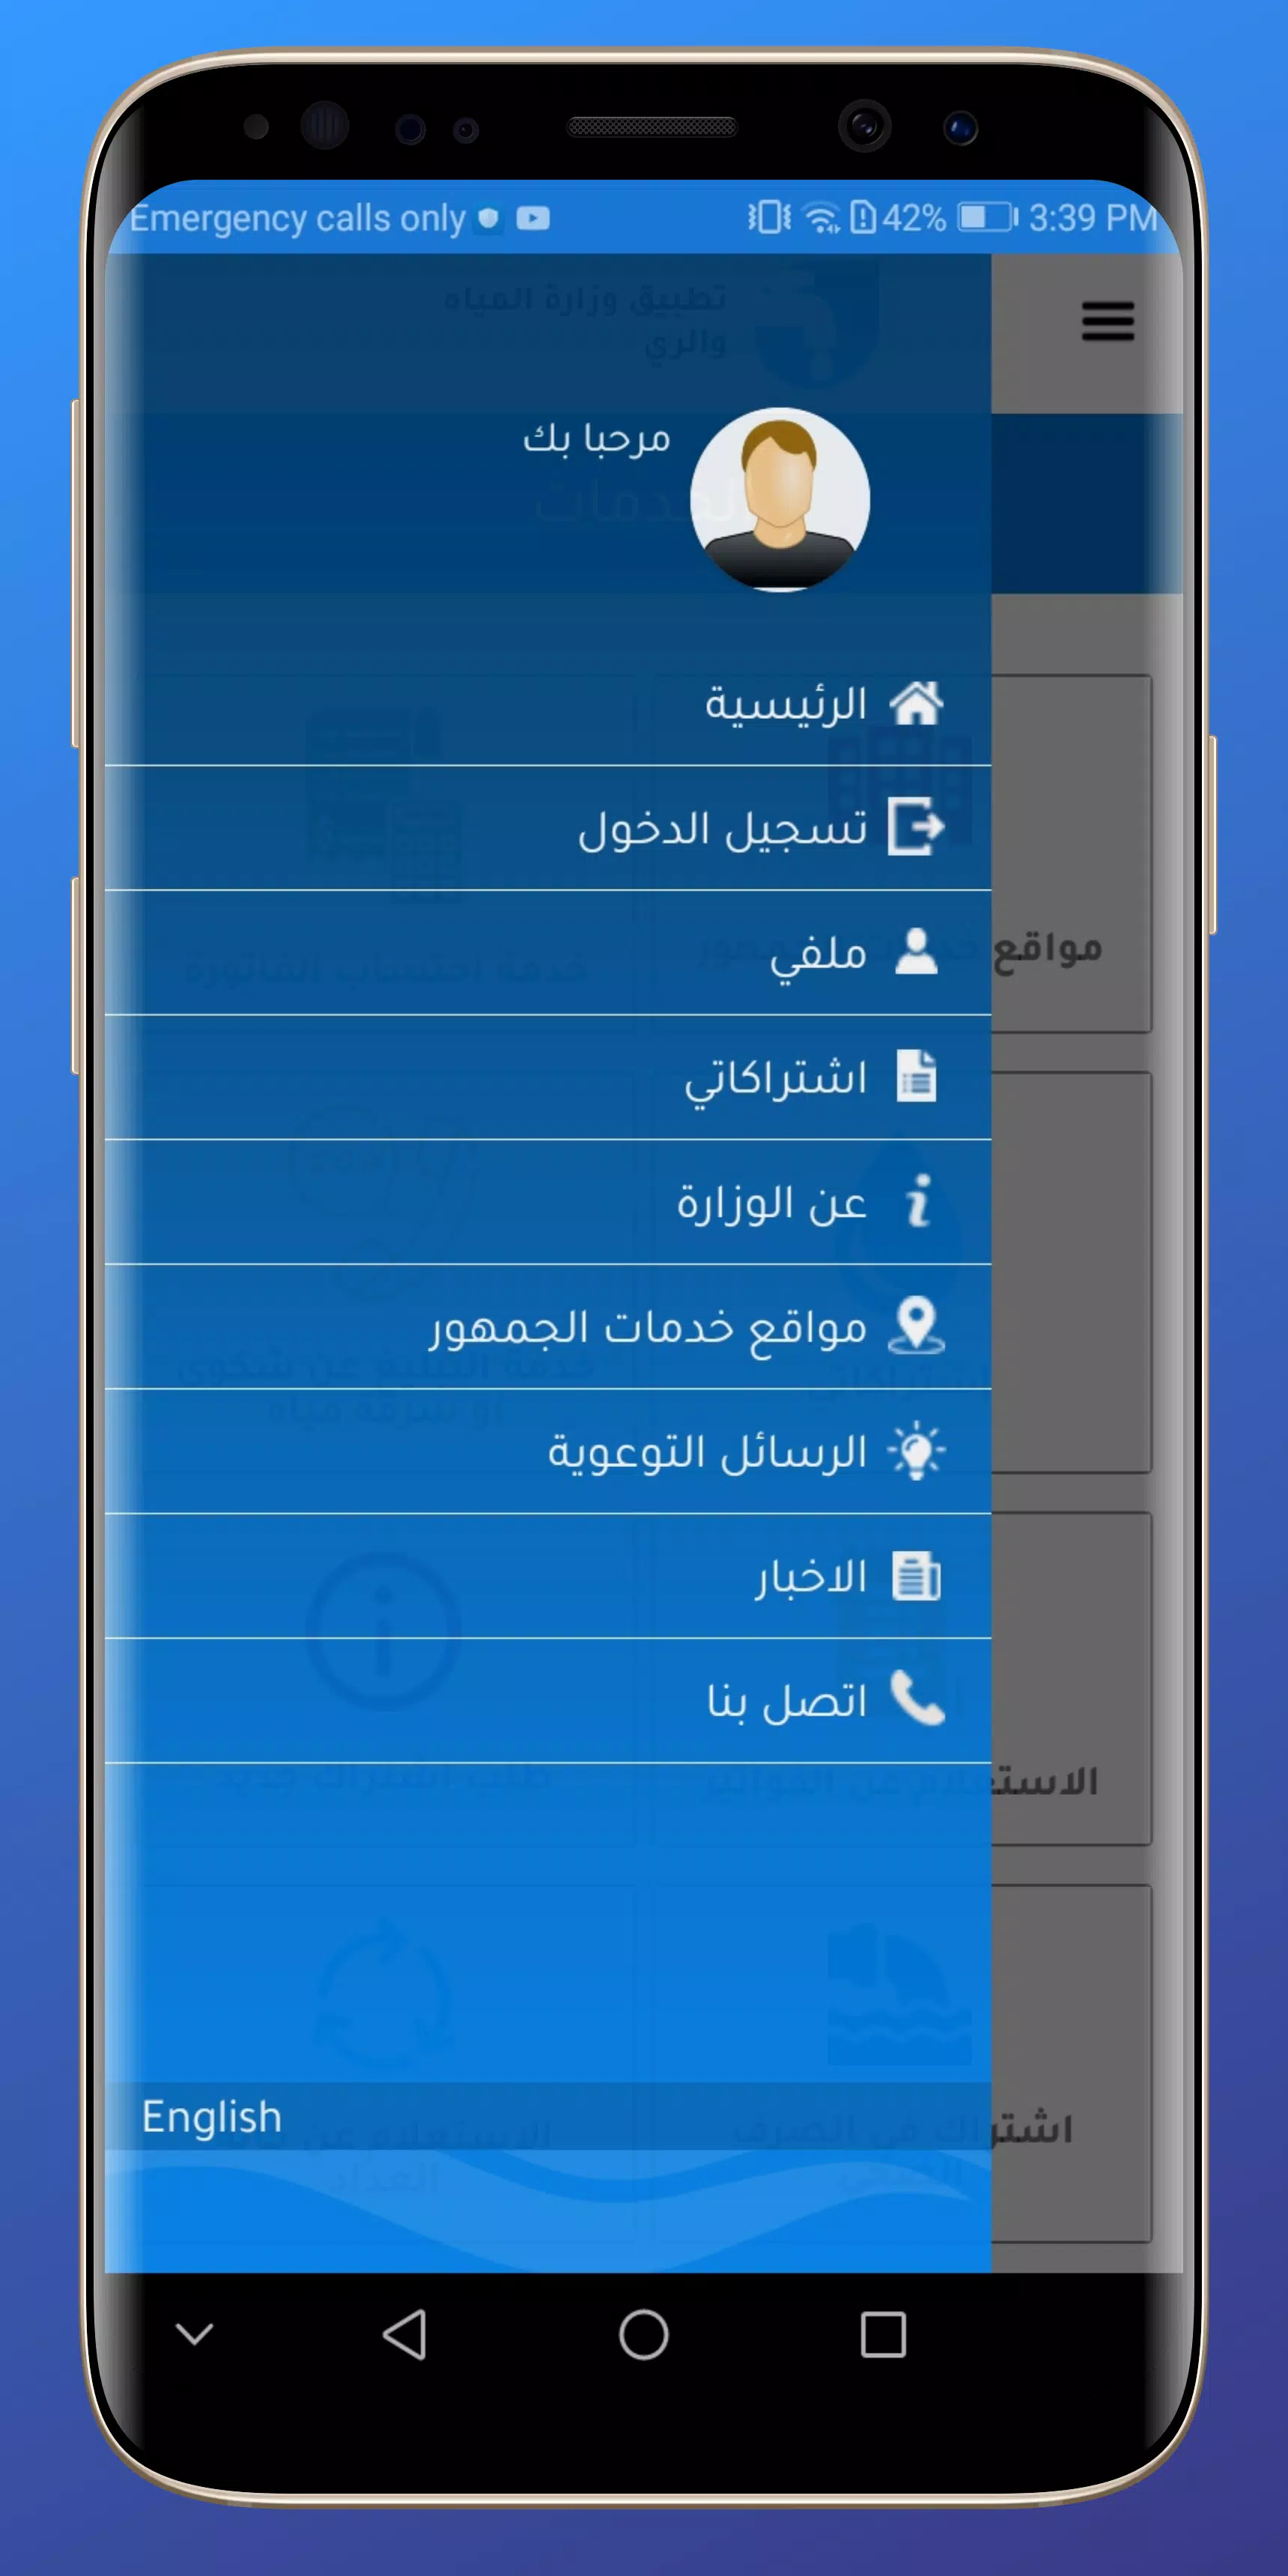 MWI - وزارة المياه والري APK for Android Download